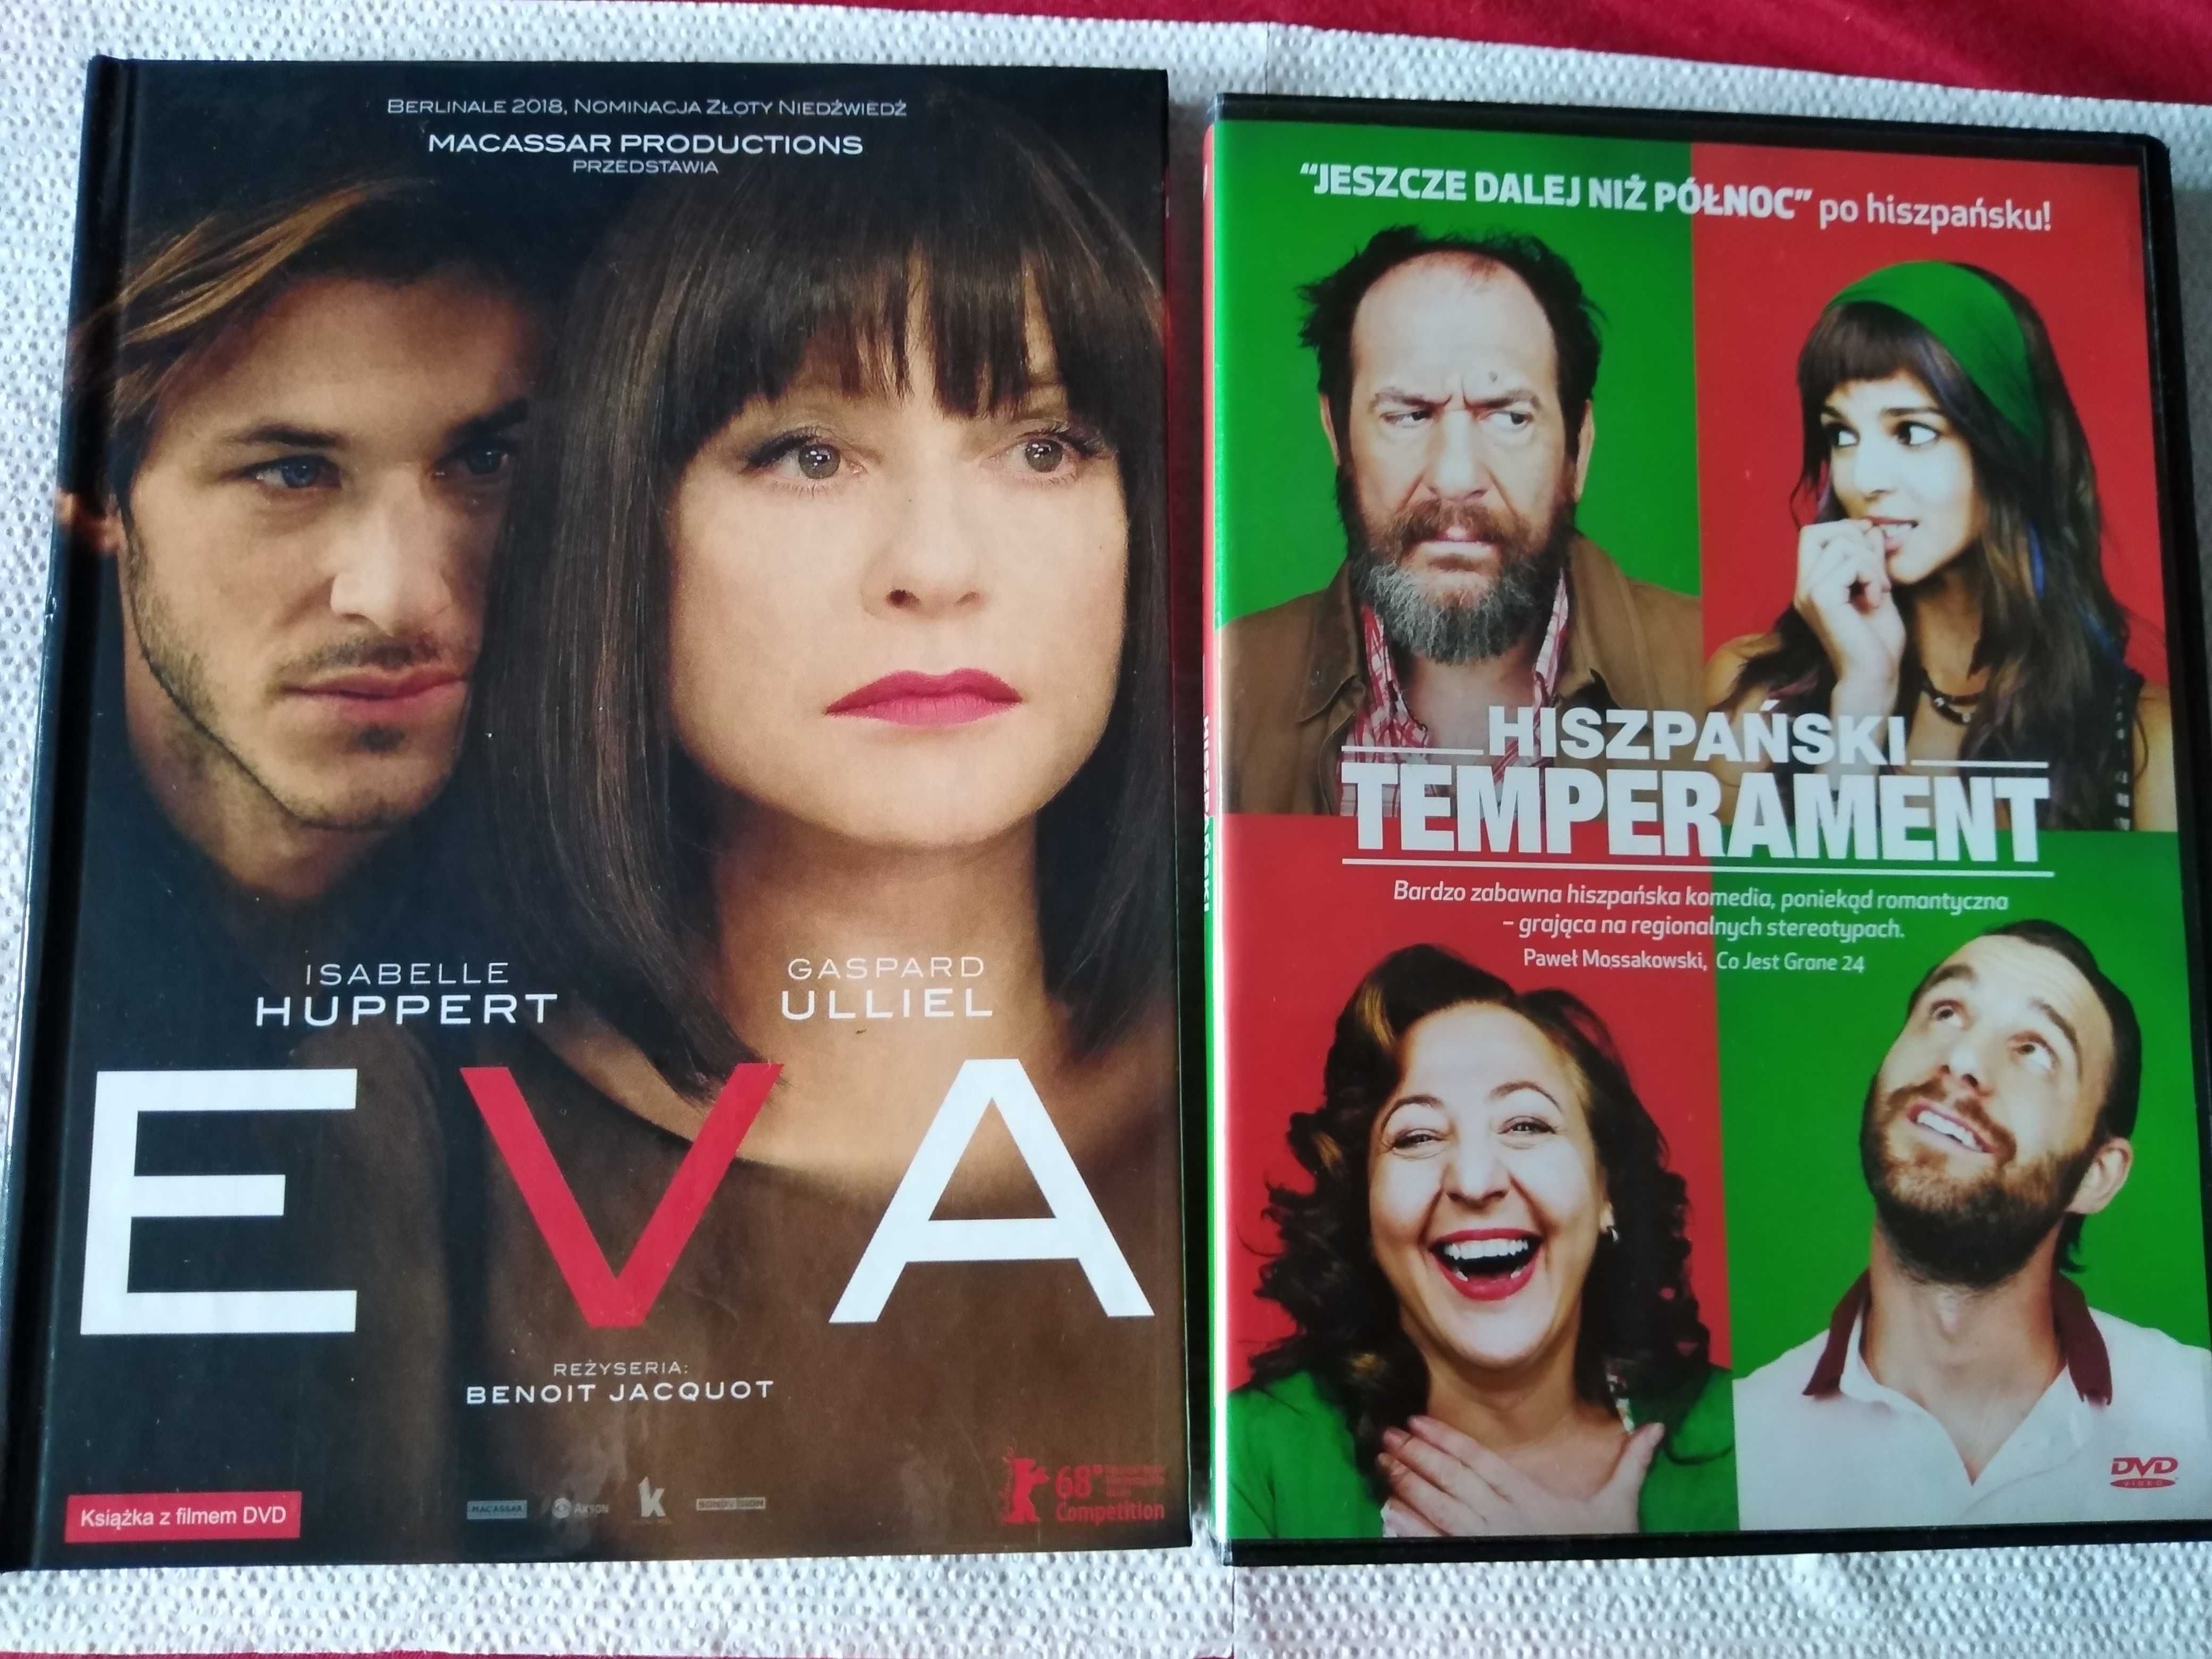 Hiszpański temperament dvd,Eva dvd , filmy raz oglądane po 30 zł.